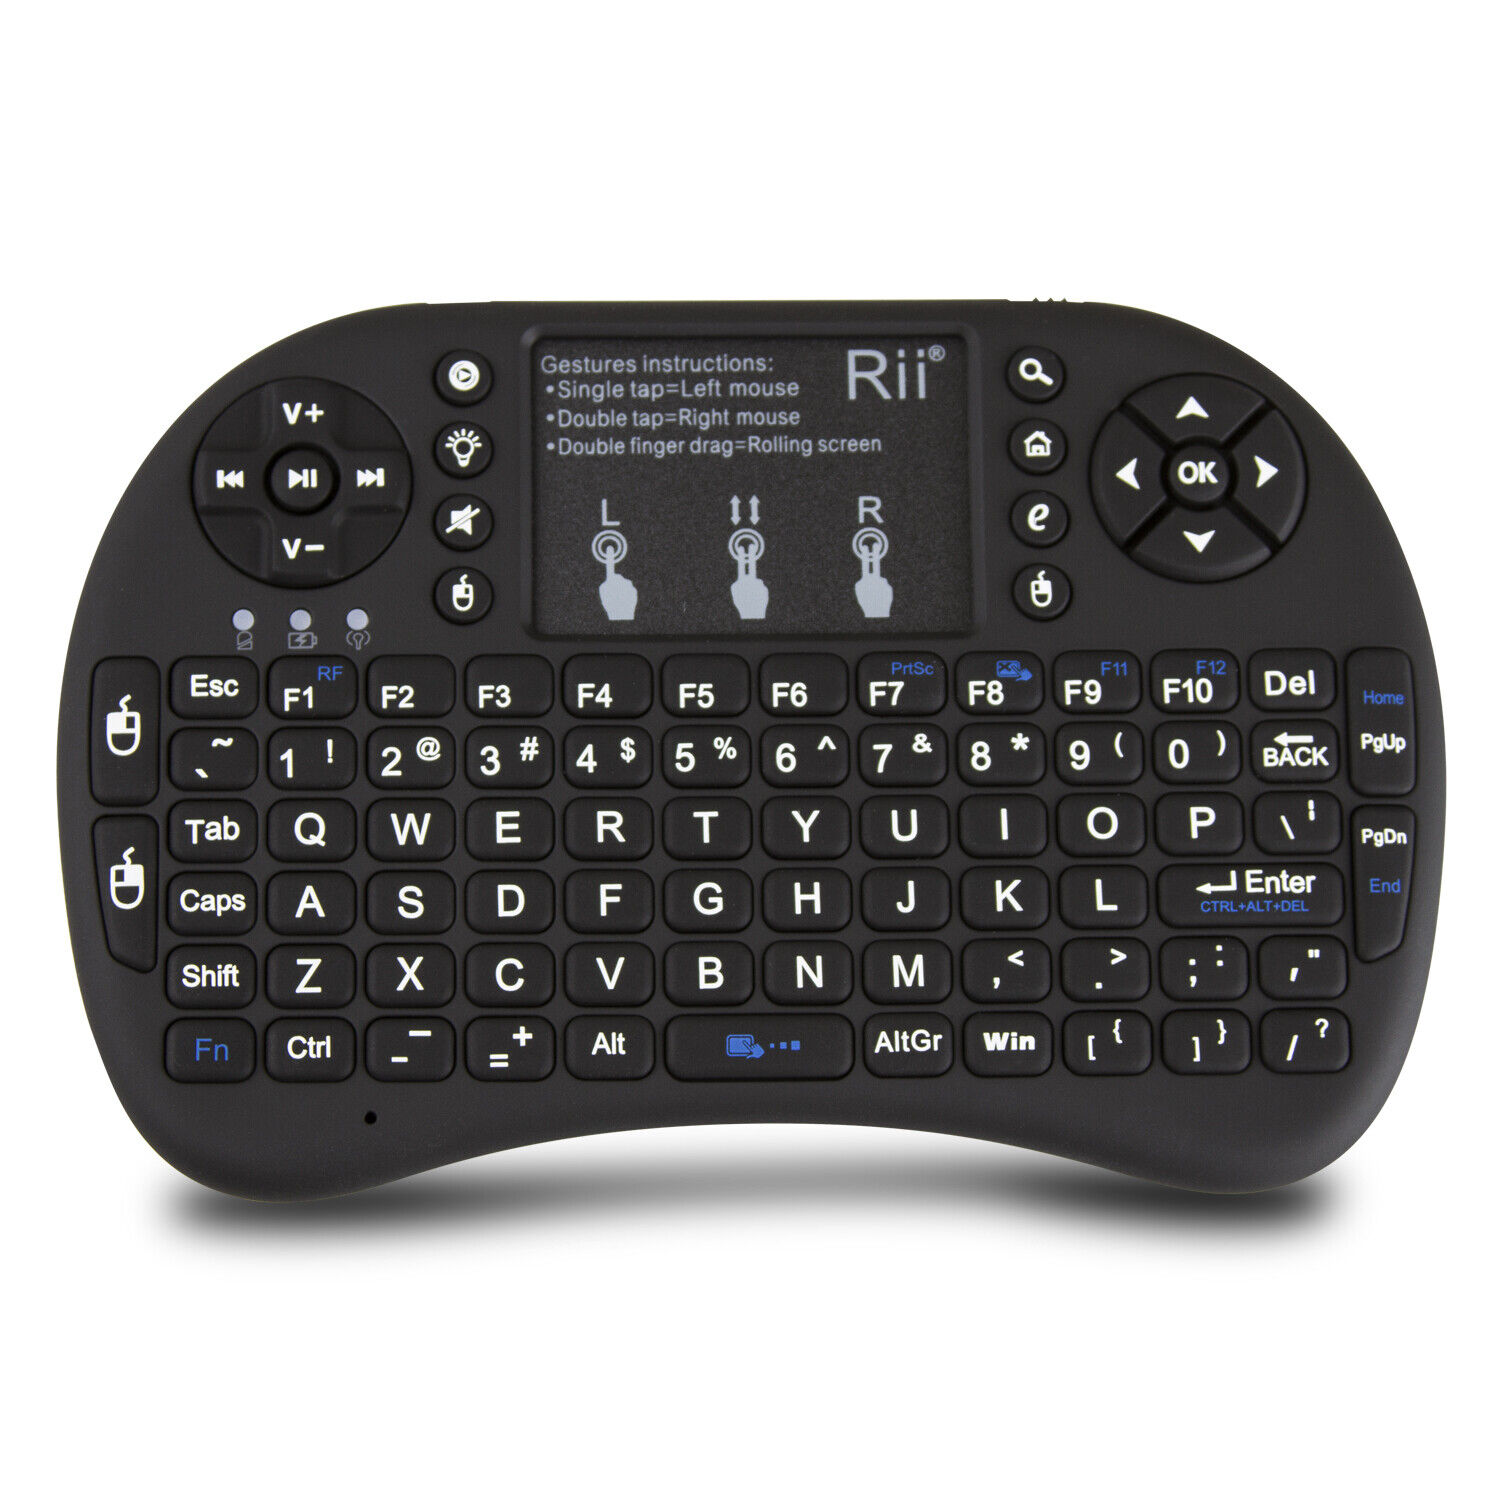 Genuine Rii i8+ Mini 2.4GHz WIRELESS Backlight Touchpad Keyboard -PC/TV/Laptop